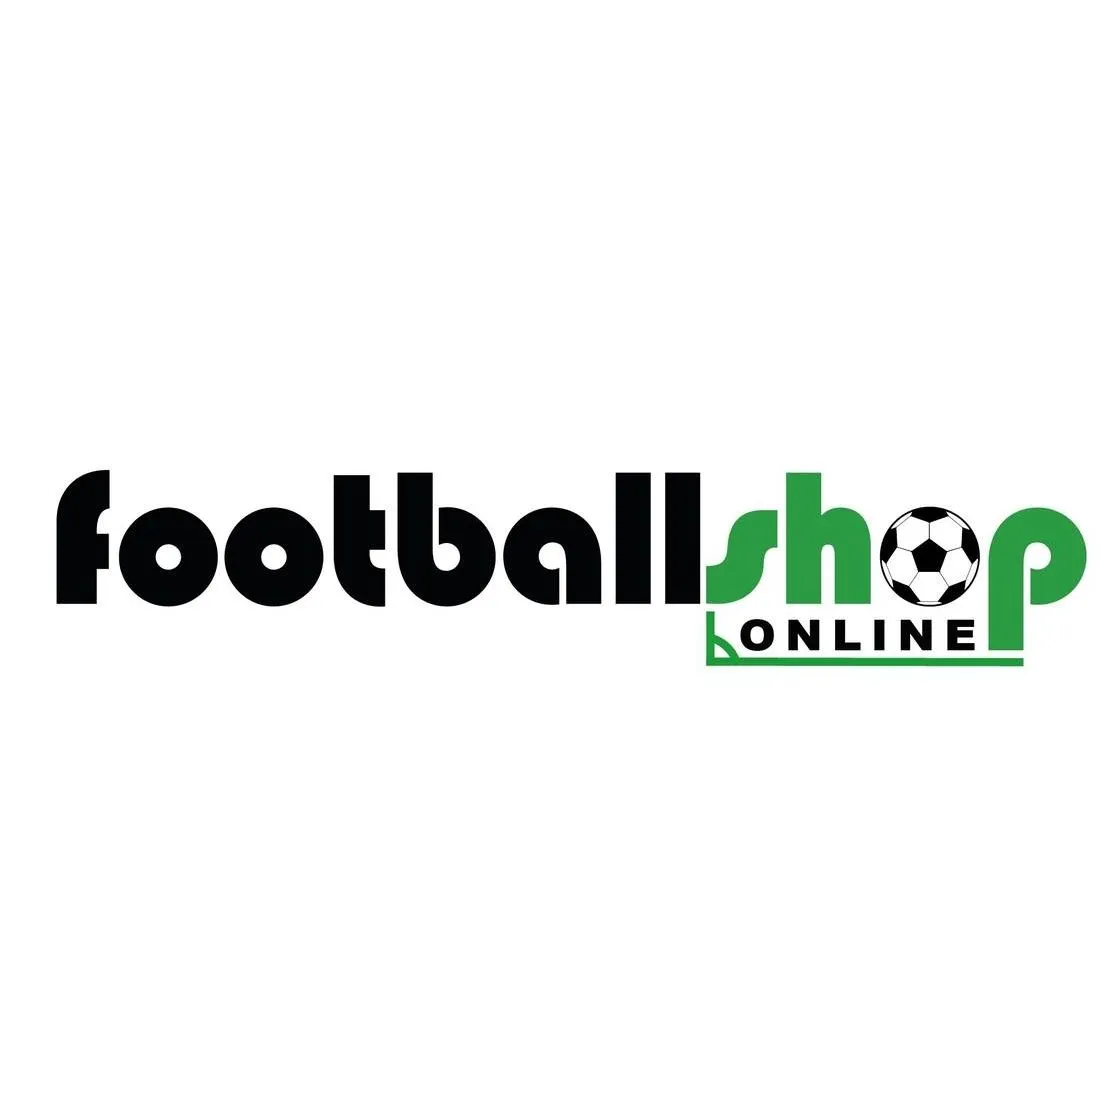  FootballShopOnline discount code